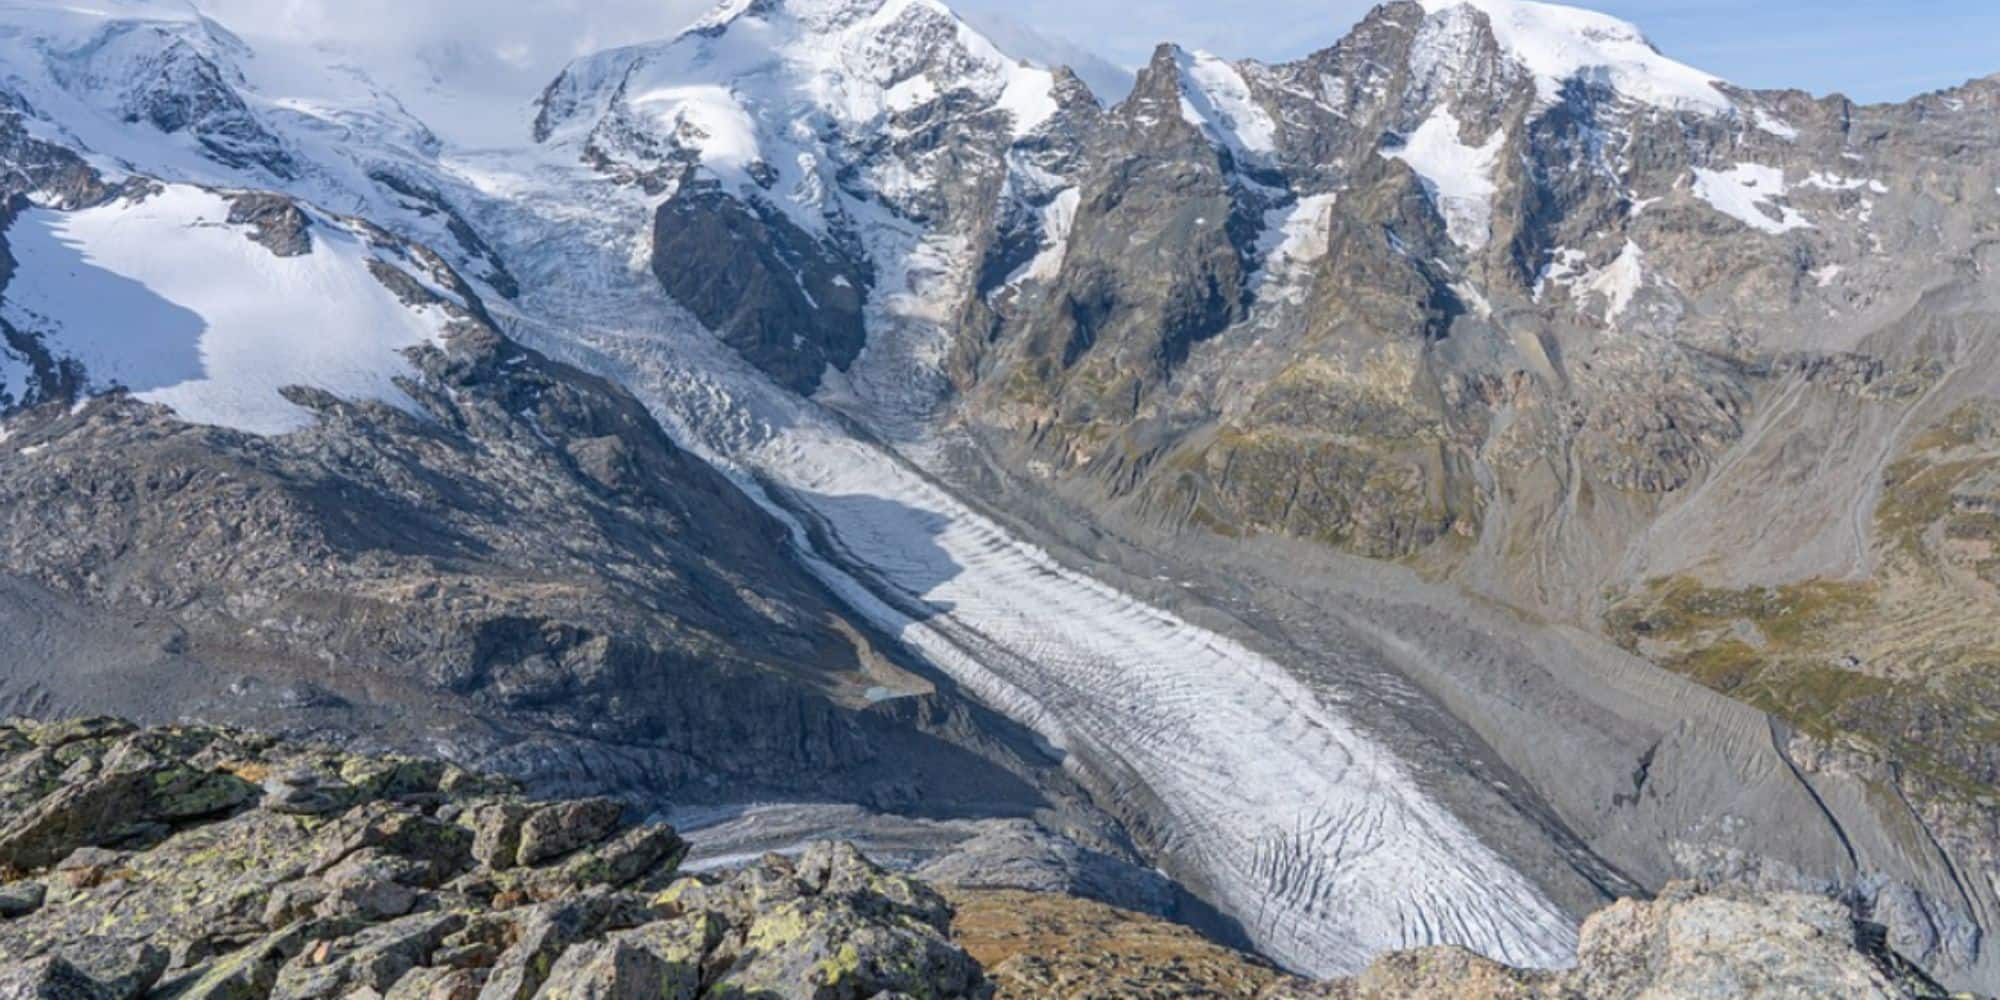 Pagetonas 23 8 22 1 - Οι παγετώνες στην Ελβετία μειώθηκαν κατά 50% από το 1931 - Από το 2016 έως το 2022 έχασαν 12% όγκο (εικόνες & βίντεο)